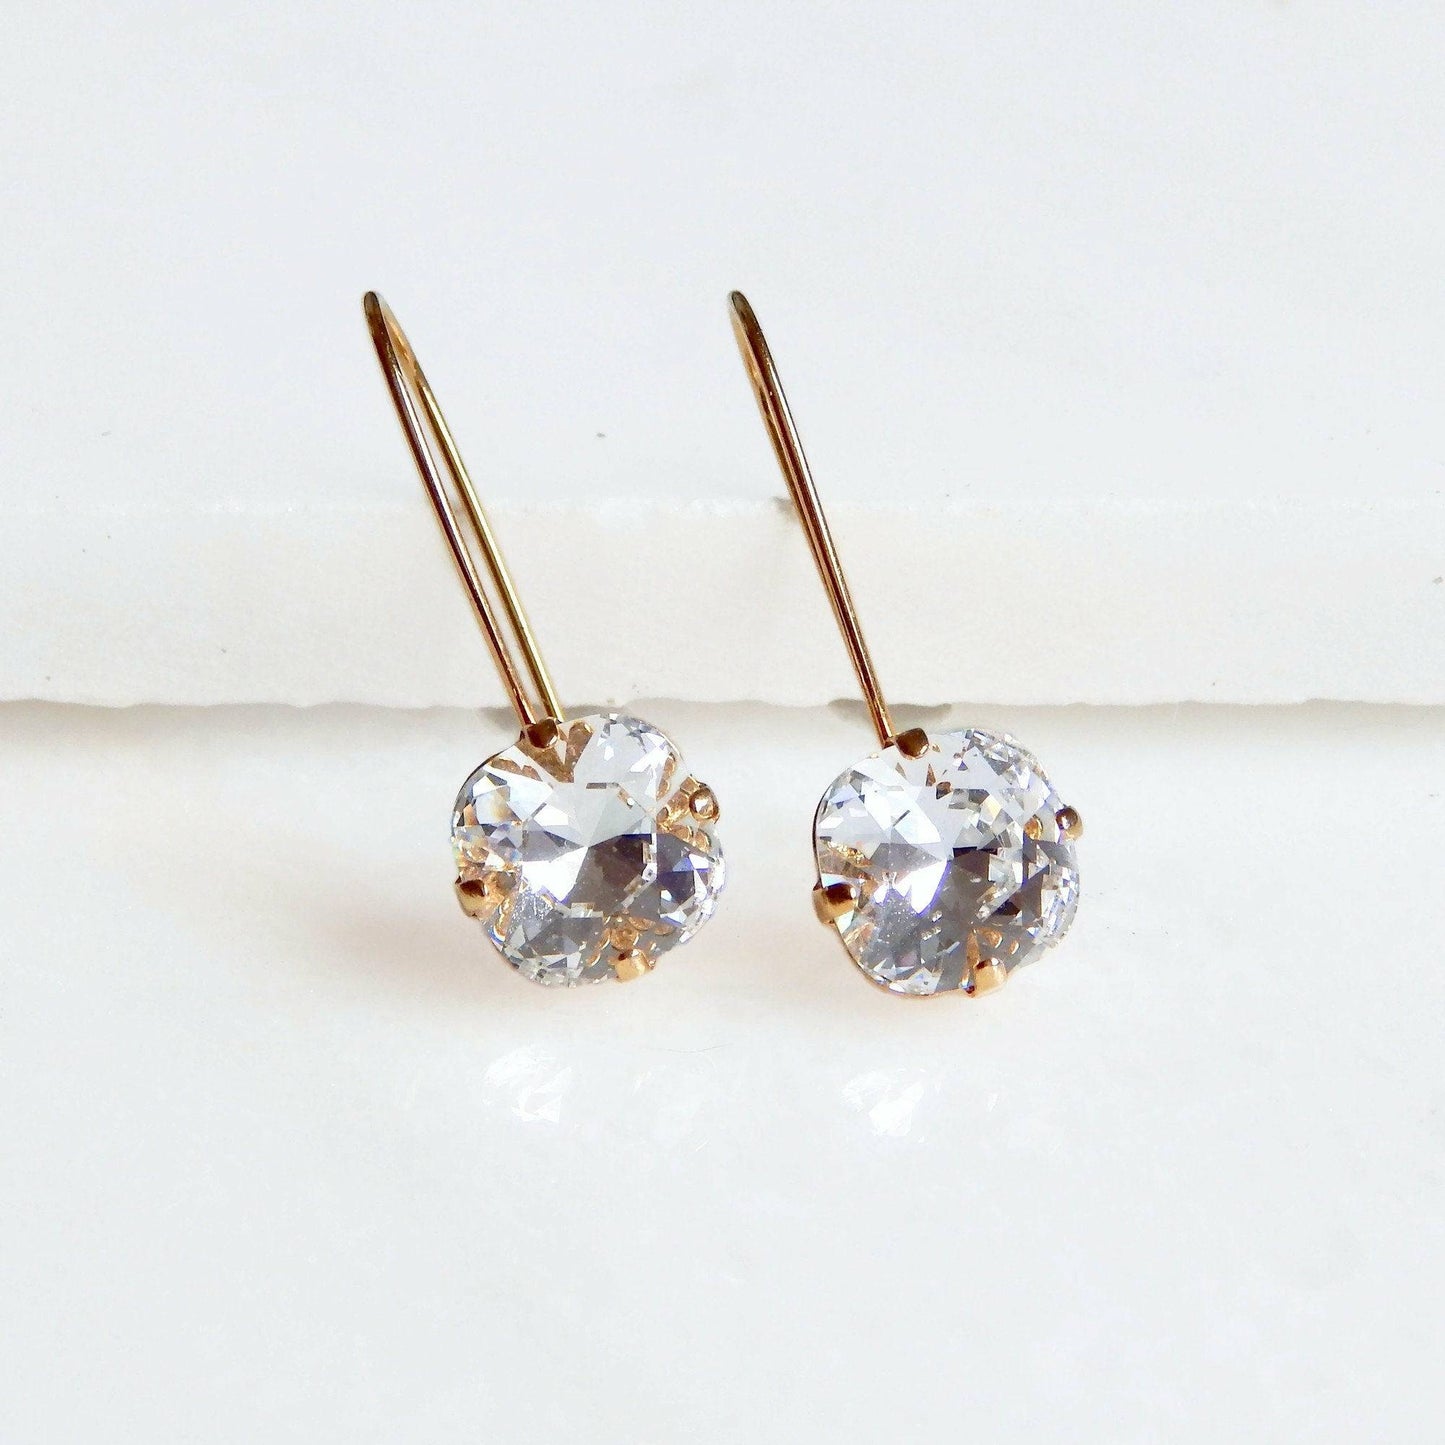 Clear crystal earrings long